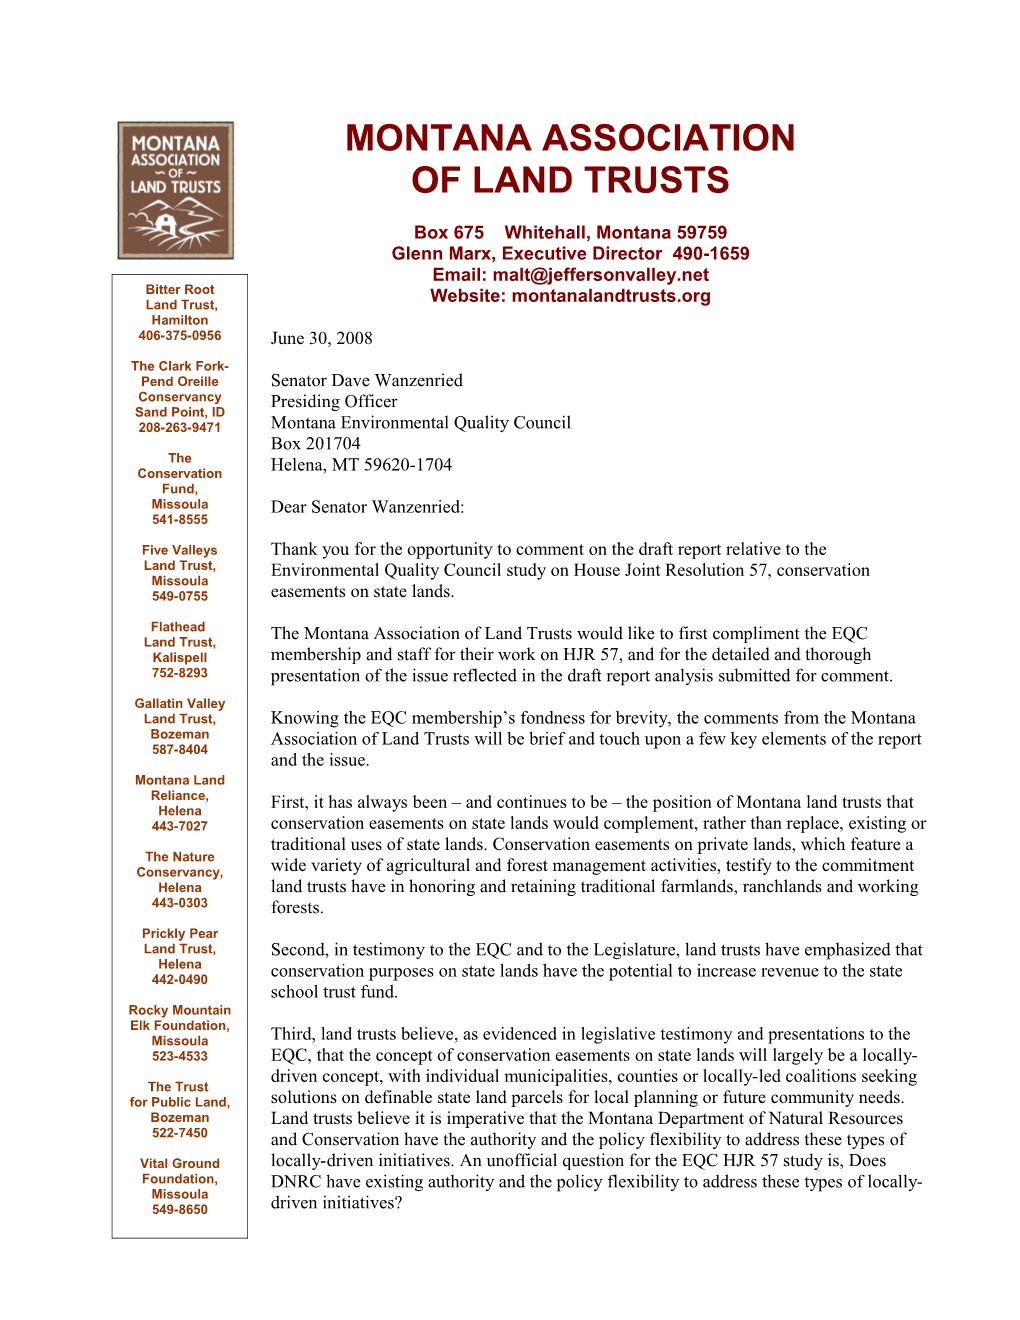 Montana Association of Land Trusts